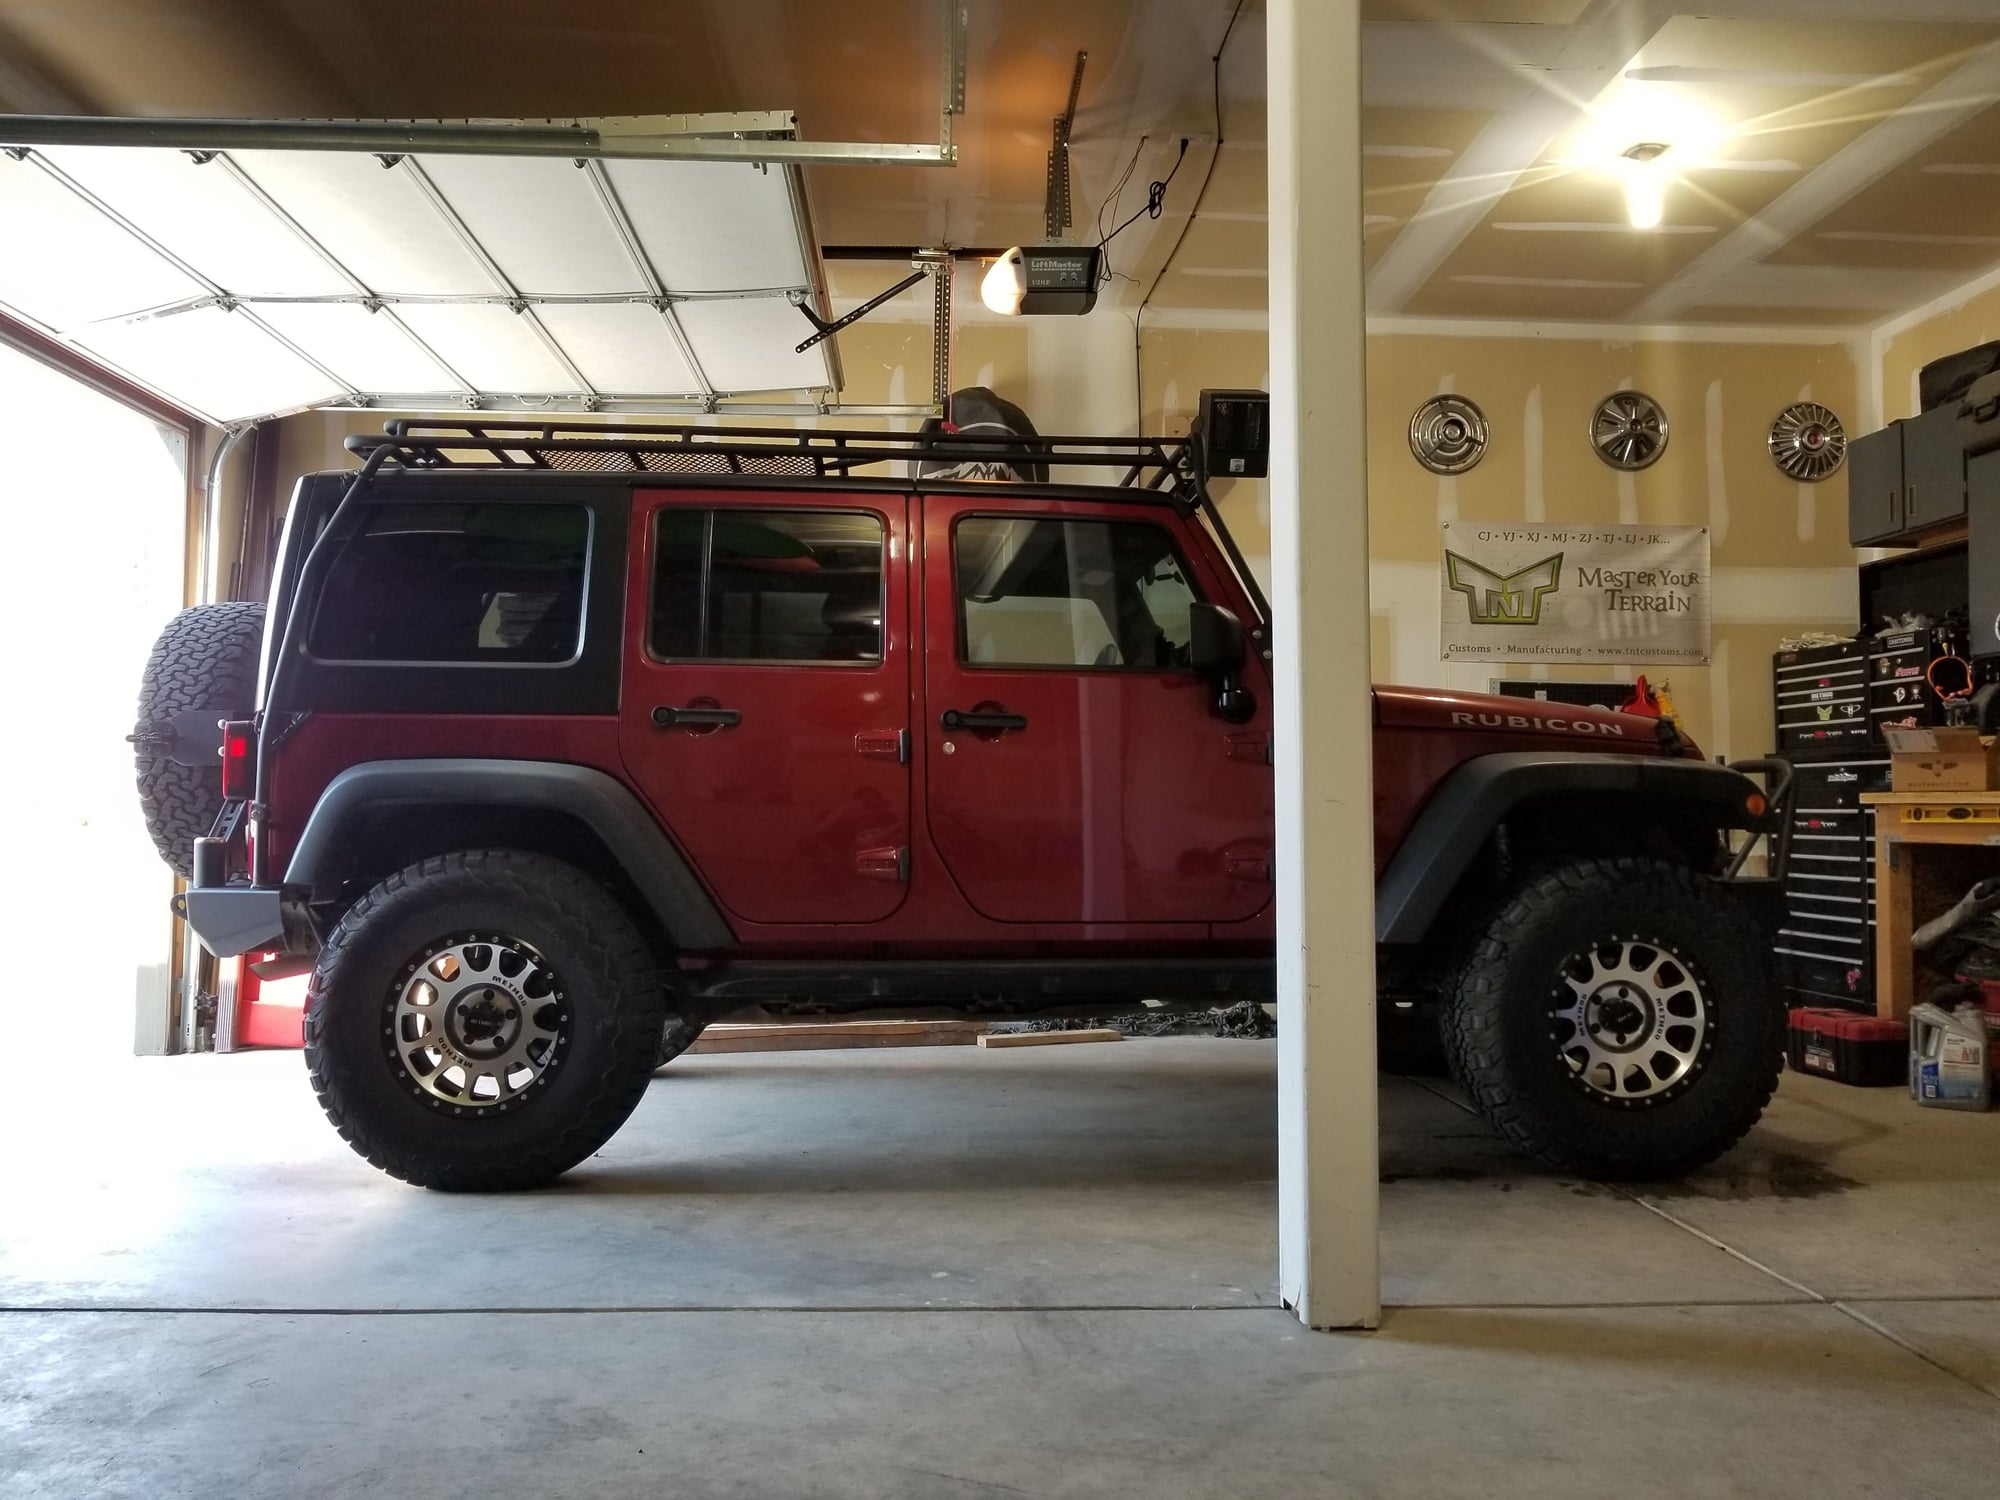 Miscellaneous - Gobi JKU roof rack - Used - 2007 to 2017 Jeep Wrangler - Casper, WY 82609, United States